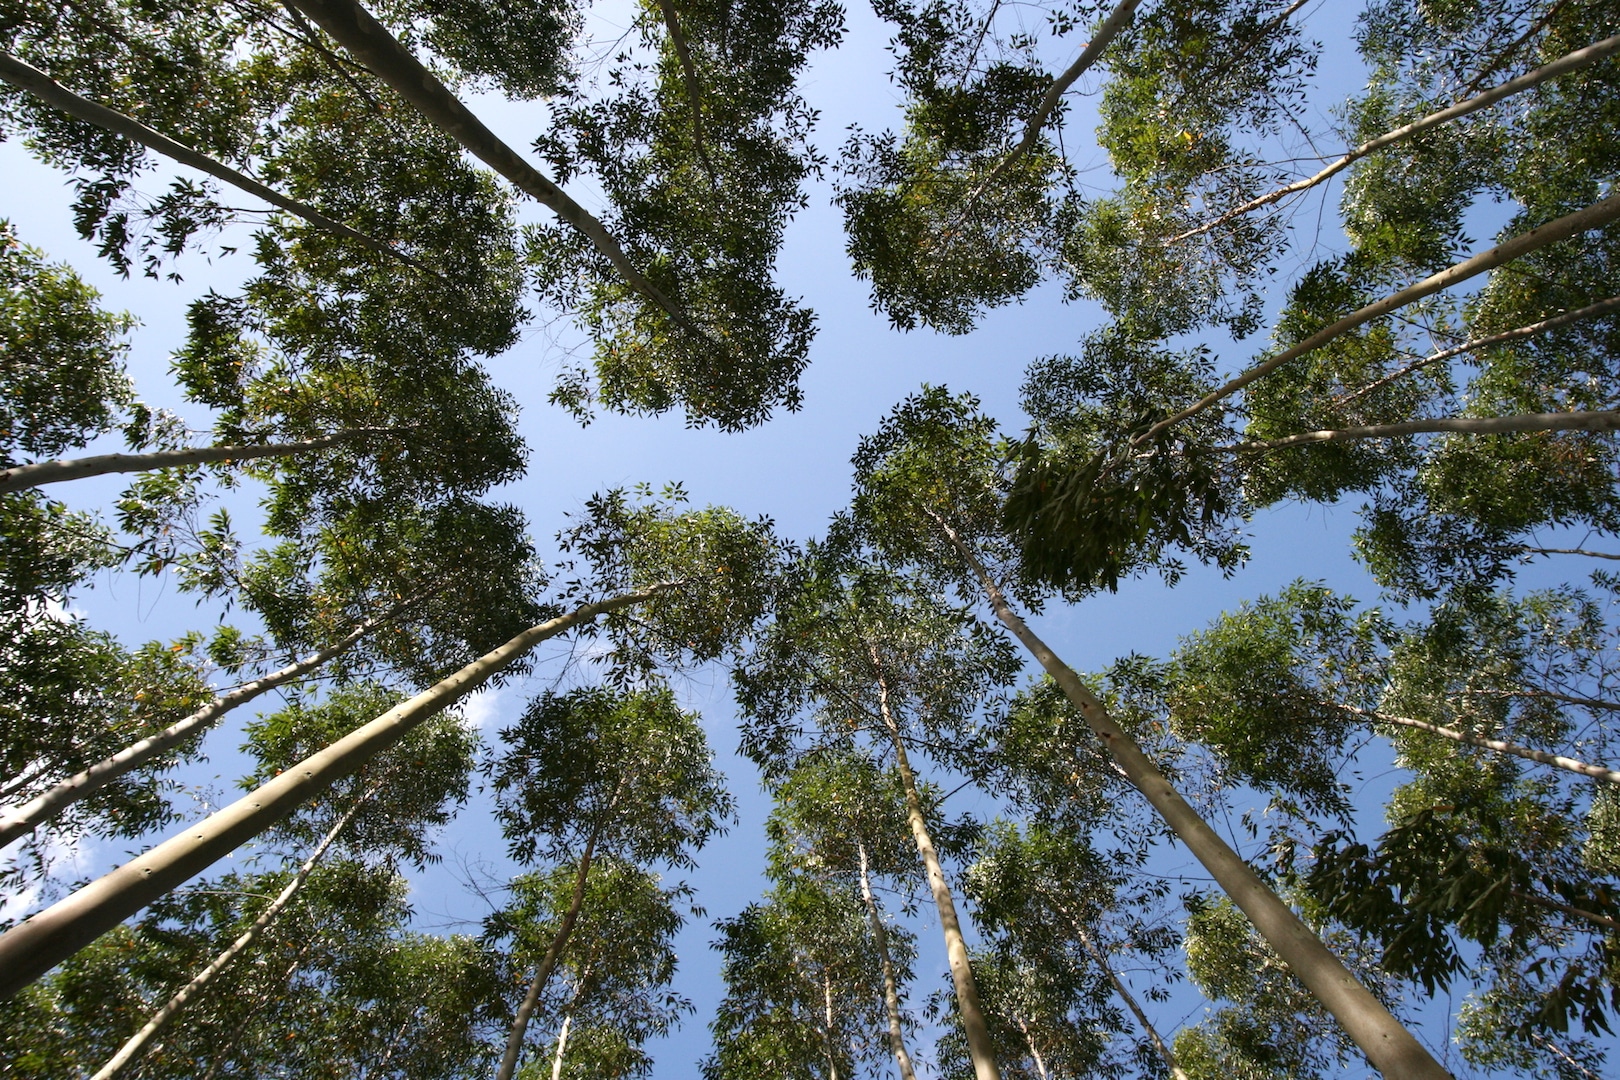 Cool view looking up thru Eucalyptus Trees